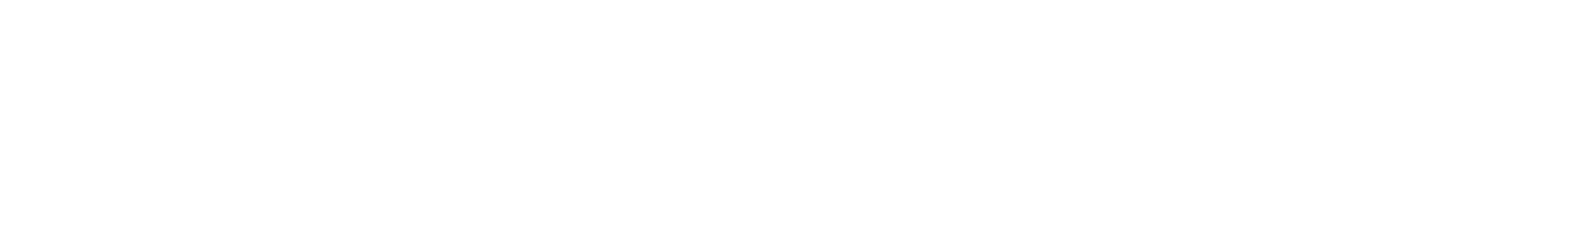 374Water logo large for dark backgrounds (transparent PNG)